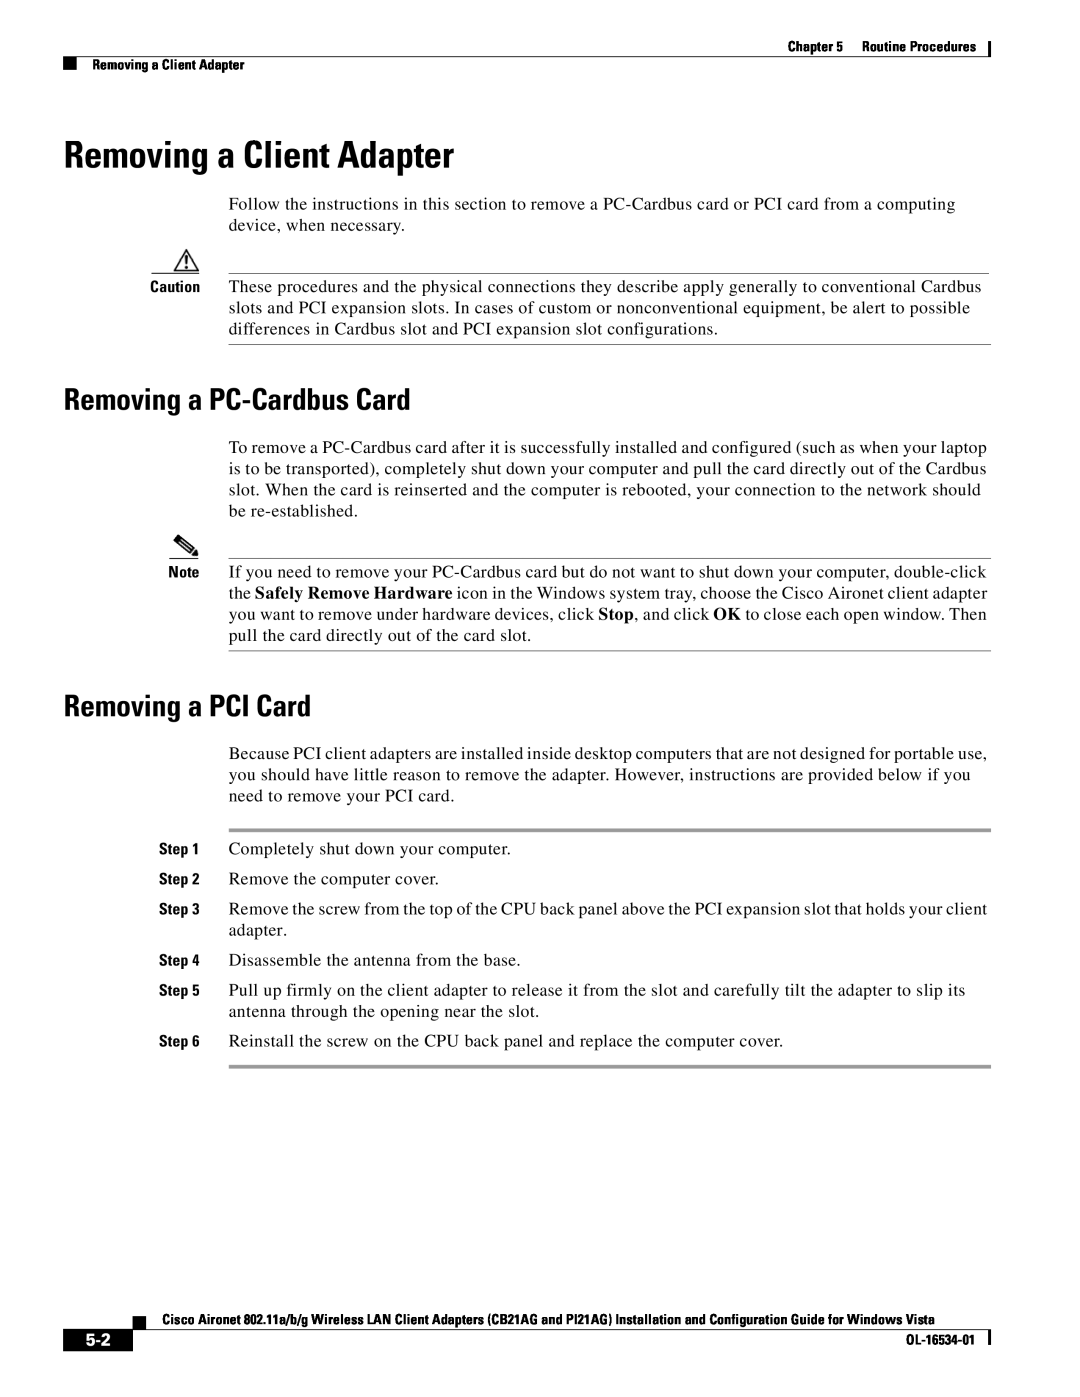 Cisco Systems PI21AG, CB21AG manual Removing a Client Adapter, Removing a PC-Cardbus Card, Removing a PCI Card 